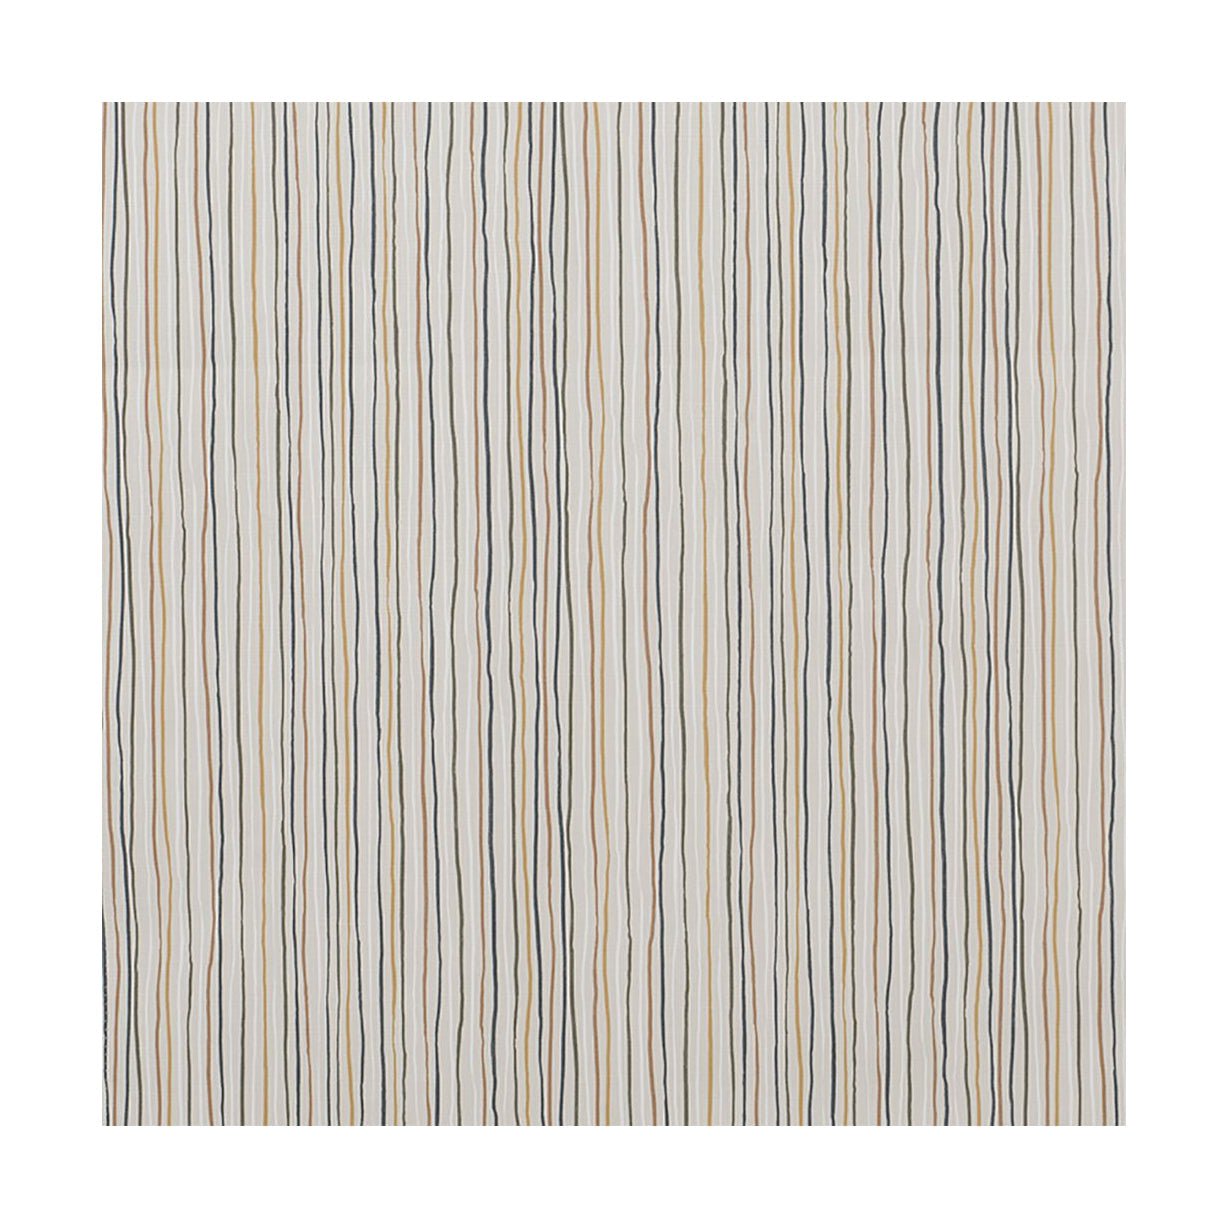 Spira Stripe CTC -tyg med akrylbredd 145 cm (pris per meter), multifärgad